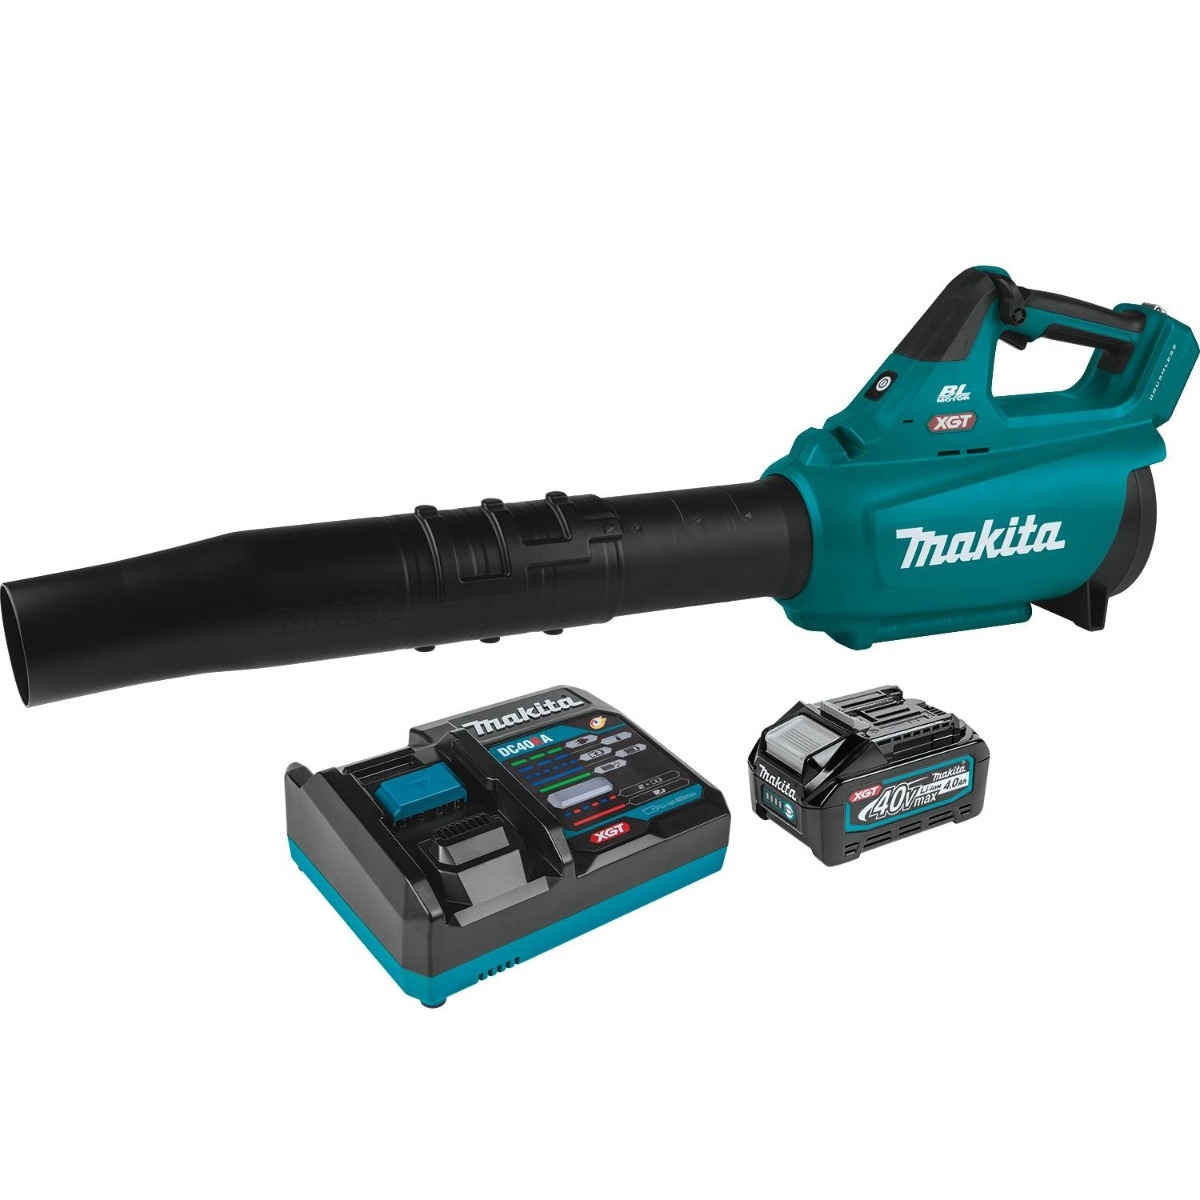 Makita GBU01M1 40V max XGT Brushless Cordless Blower 4.0Ah Kit